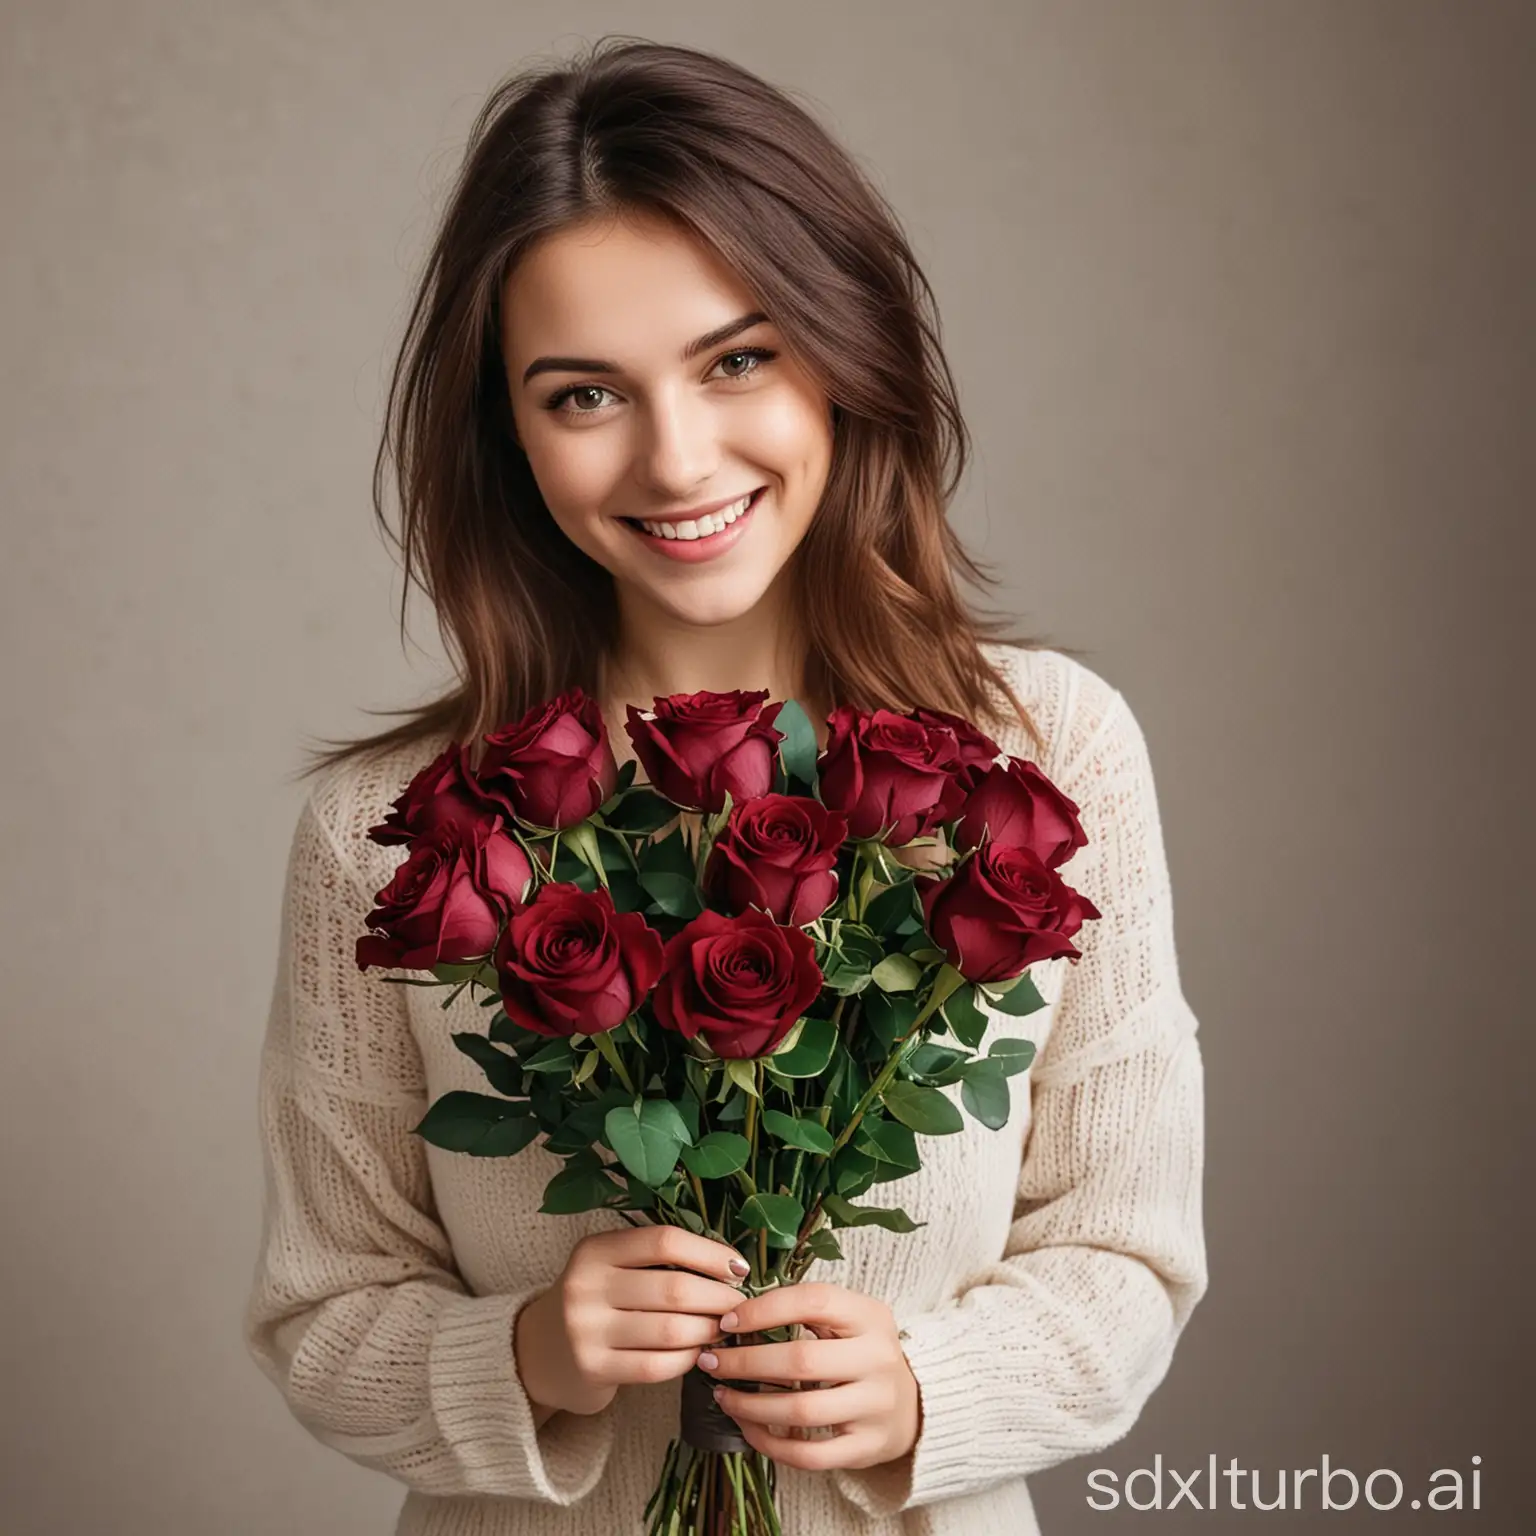 Smiling-Girl-Holding-Burgundy-Rose-Bouquet